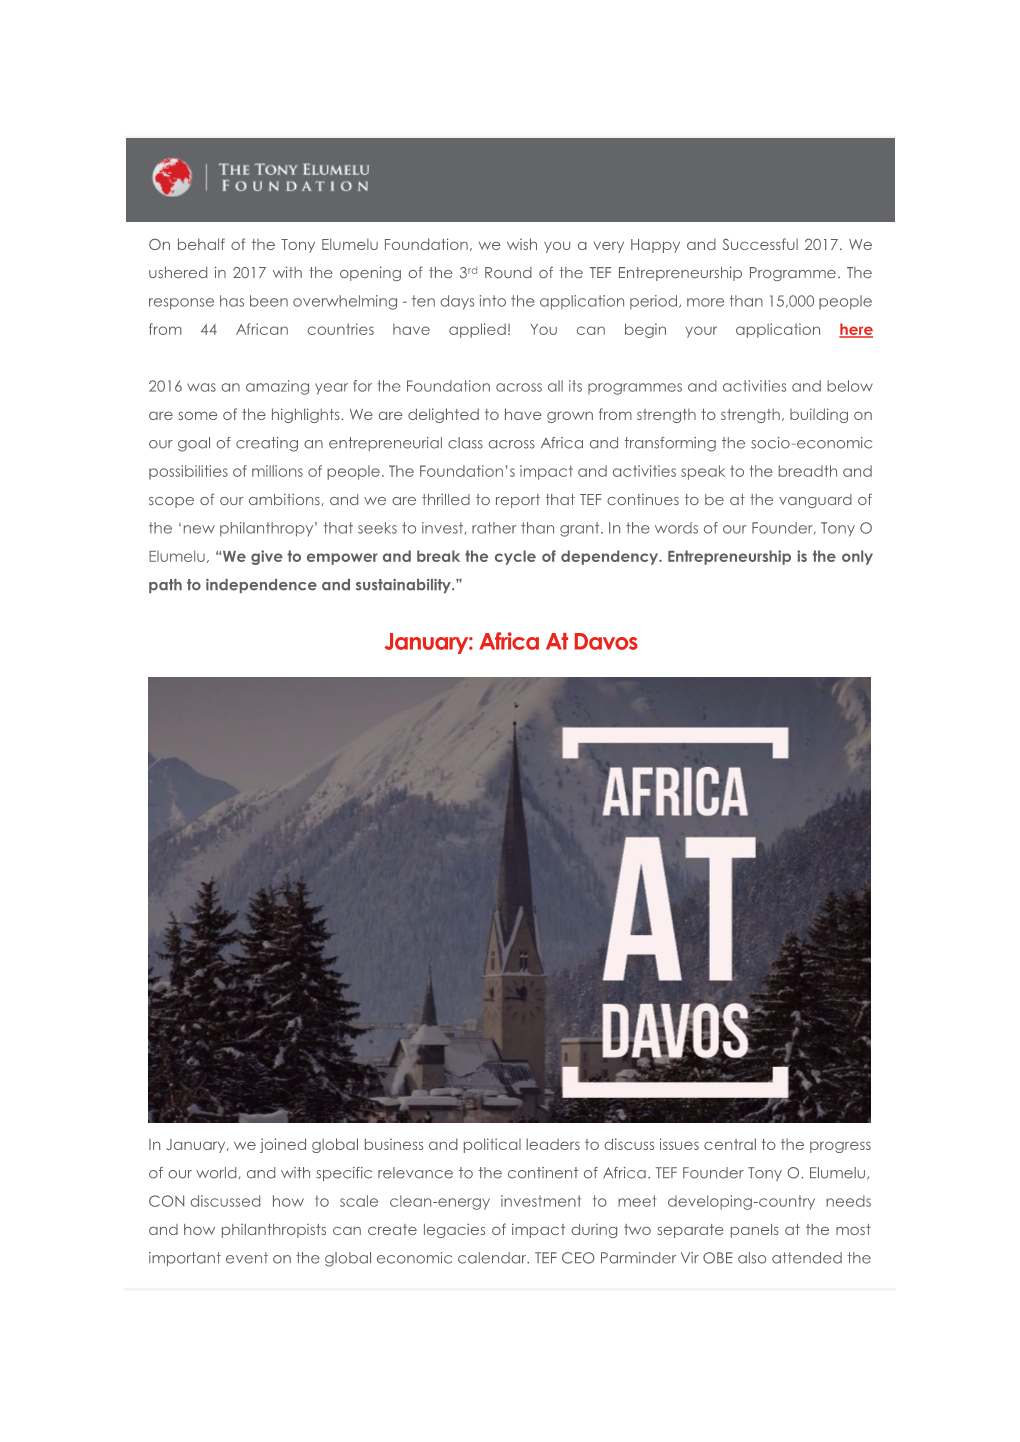 Africa at Davos